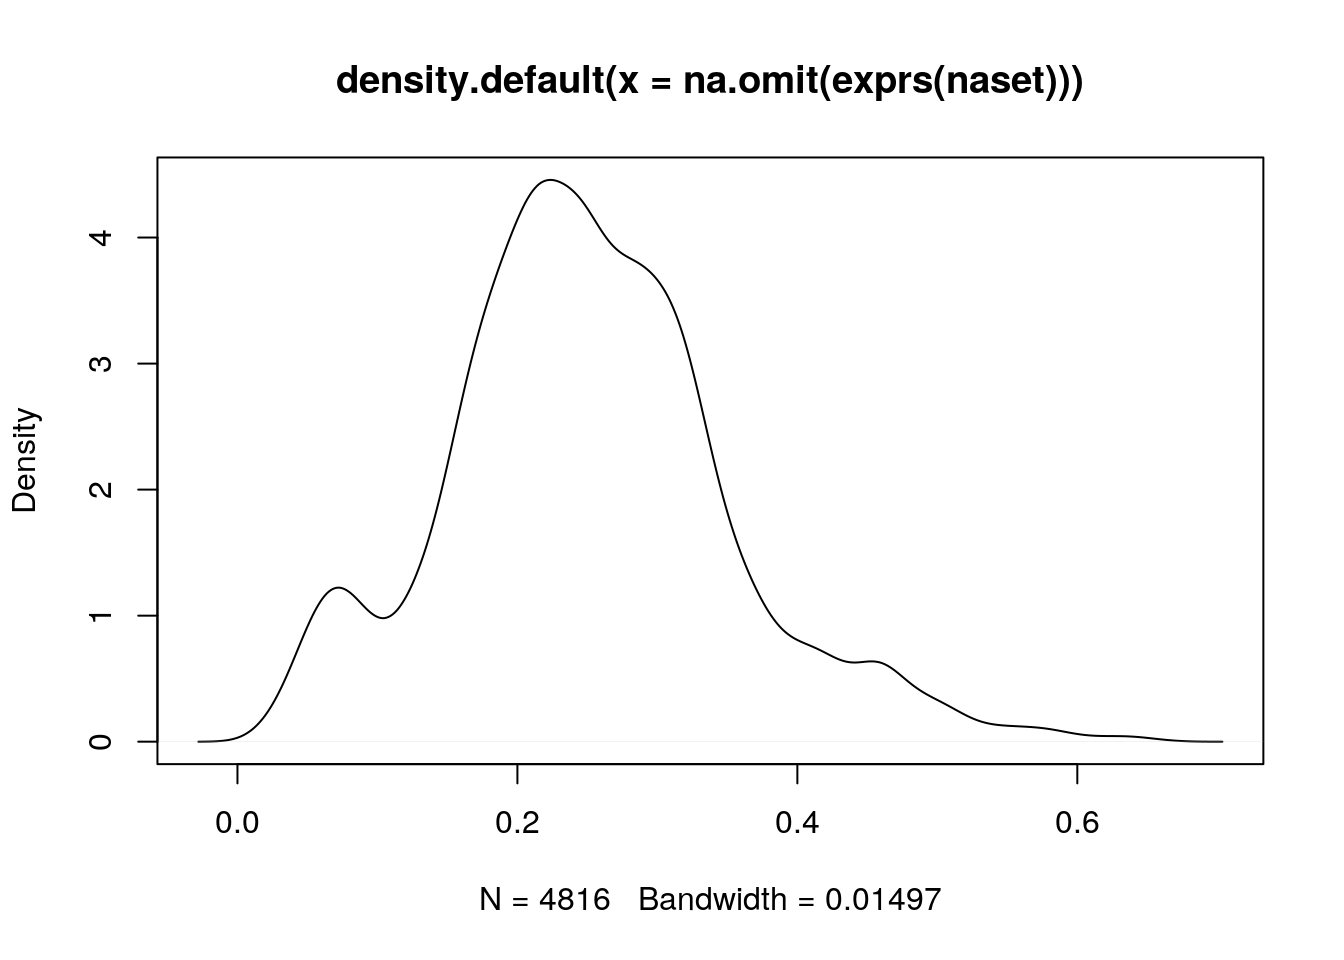 Intensity disctribution of the `naset` data.